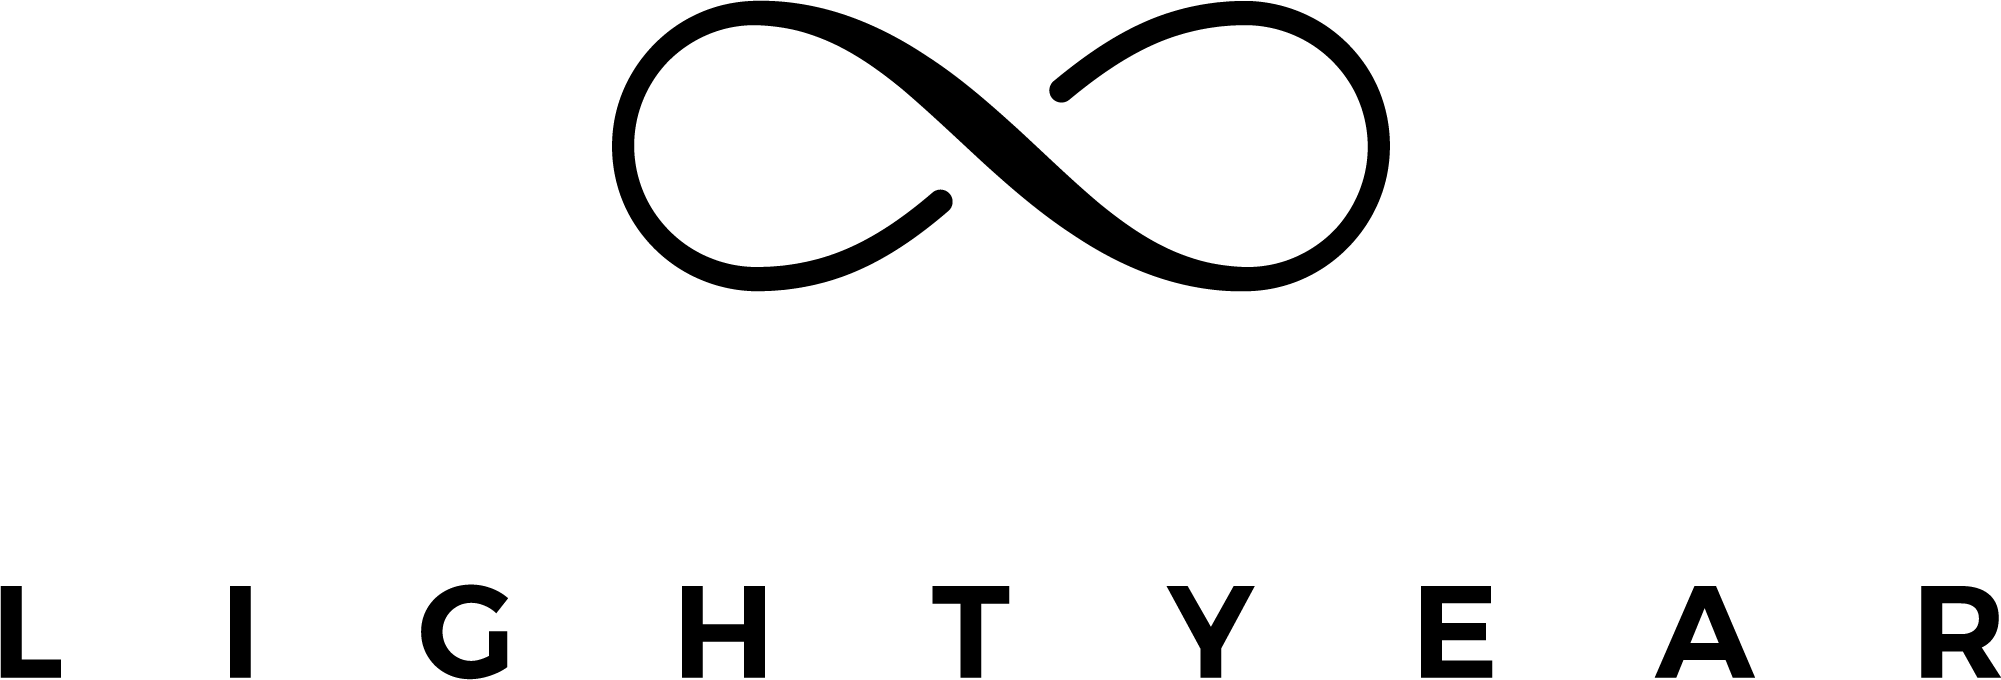 Lightyear Logo - Lightyear of the World Alliance